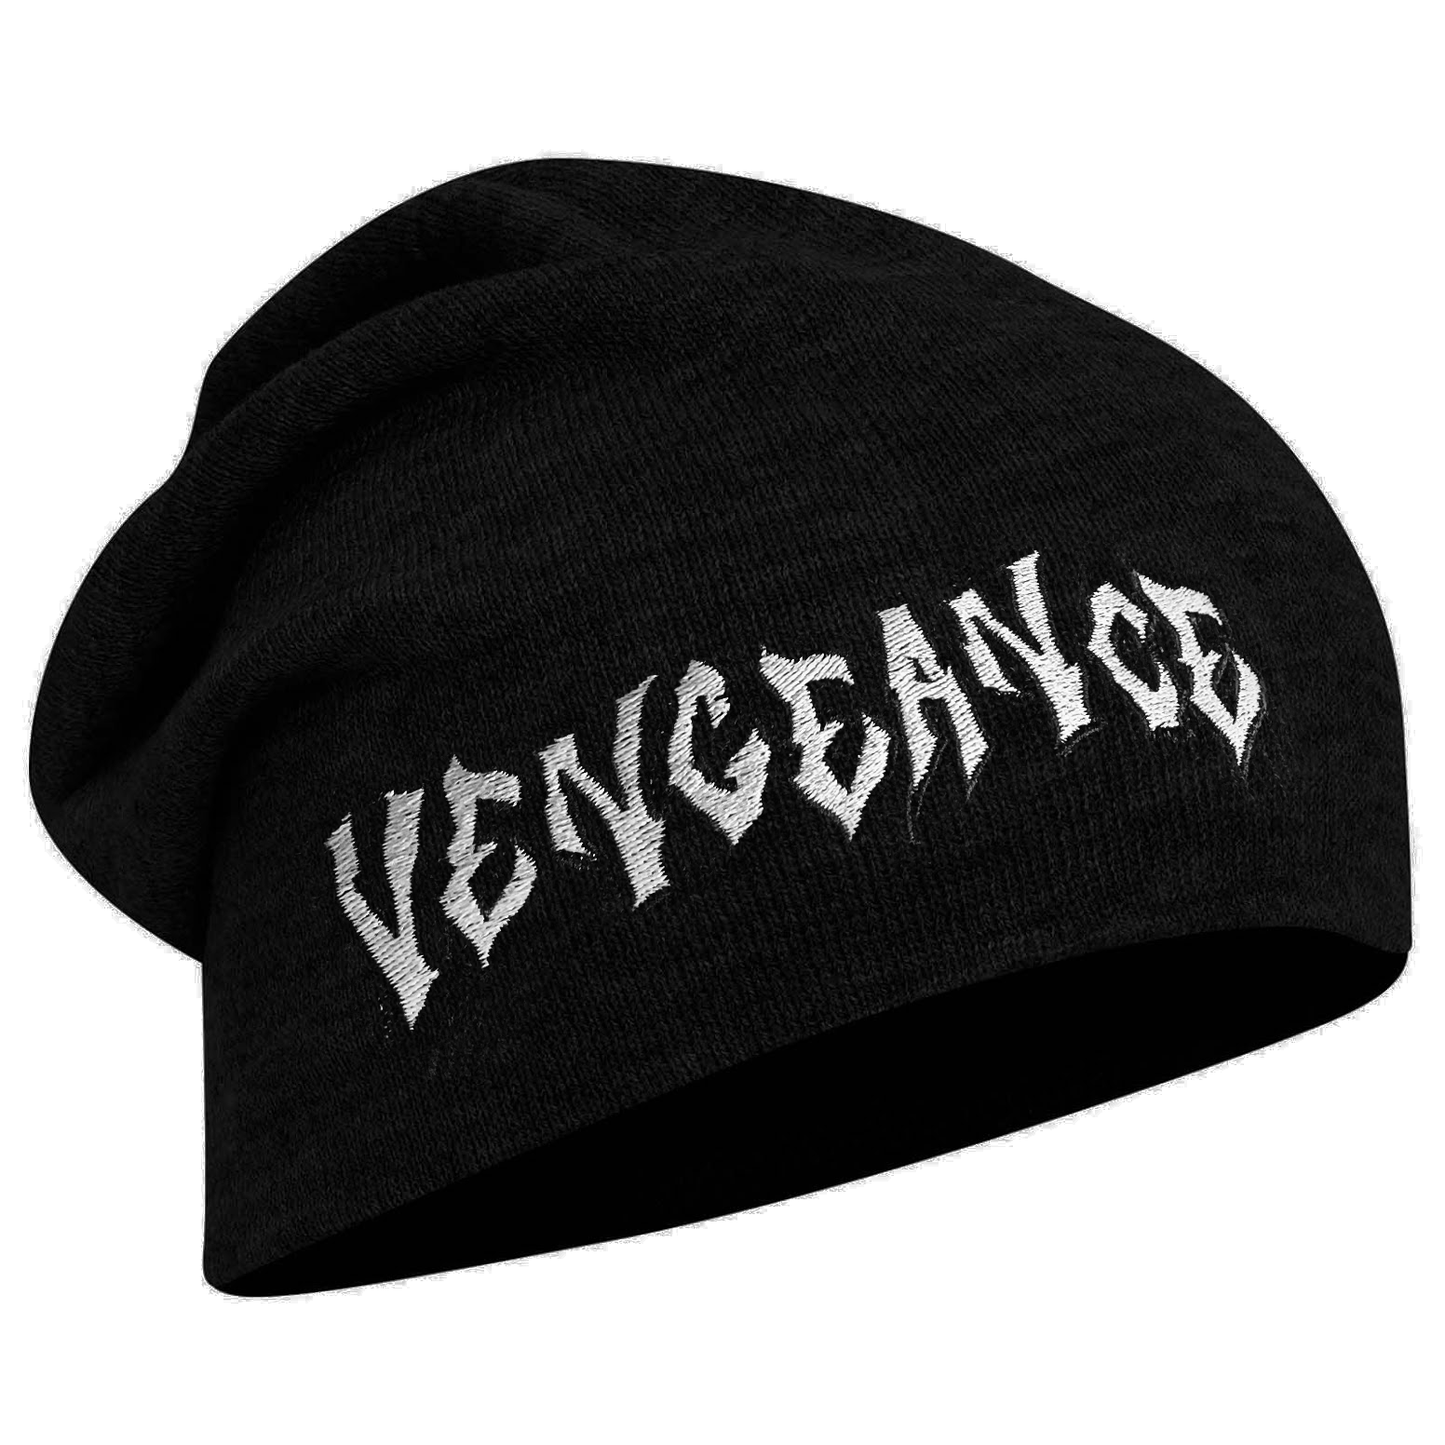 Black Vengeance Beanie - White Embroidery